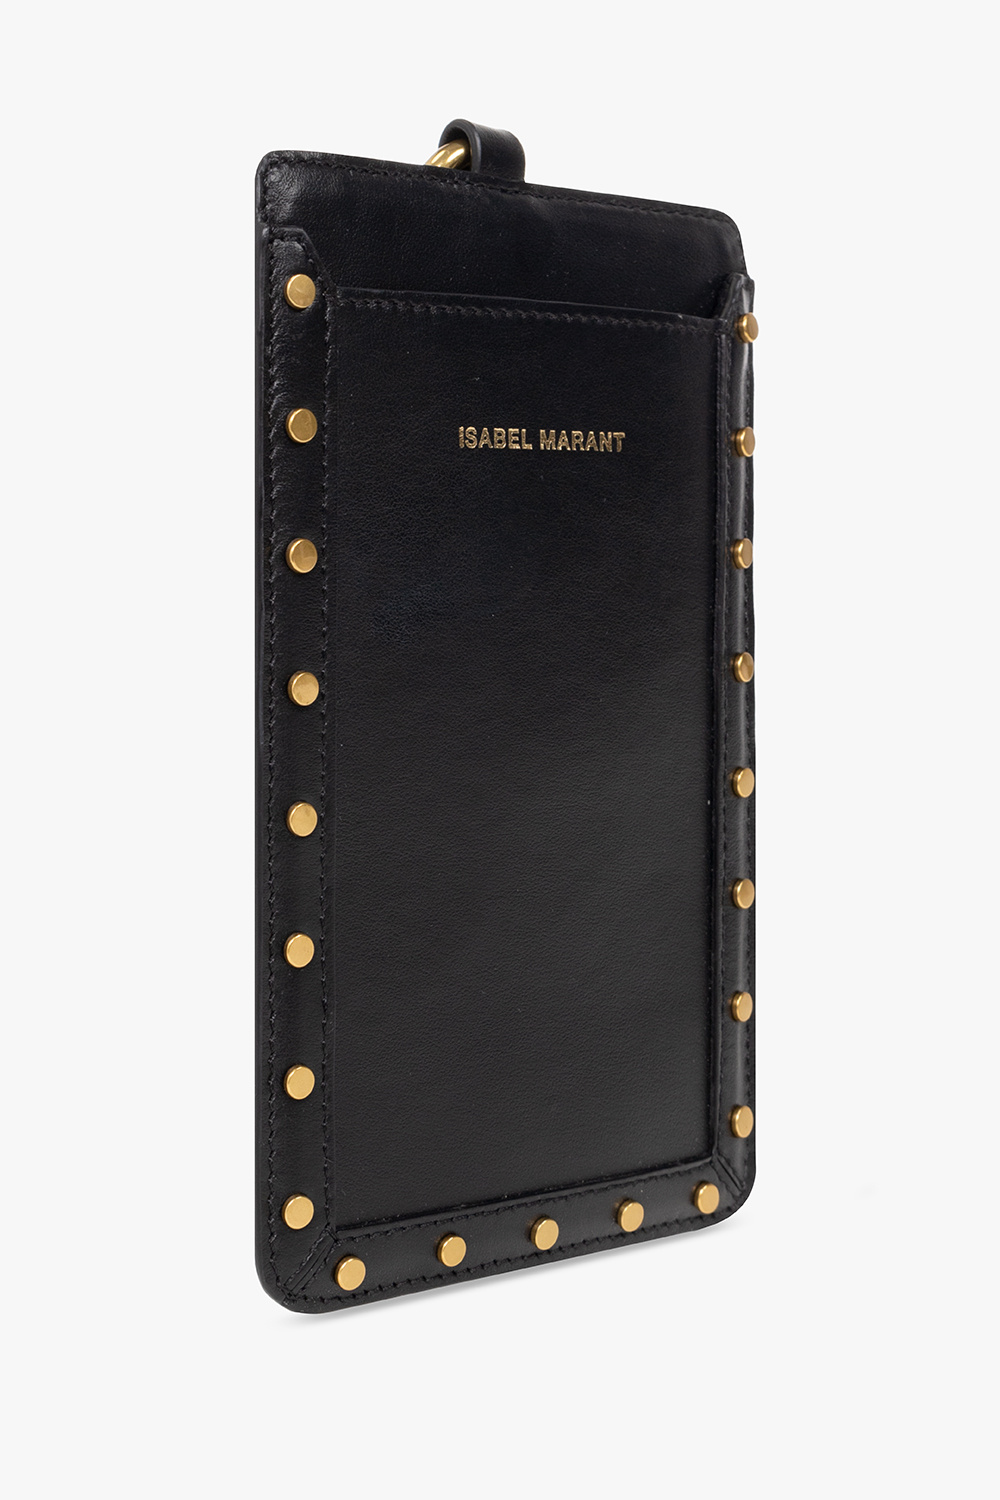 Isabel Marant ‘Tieli’ strapped phone holder